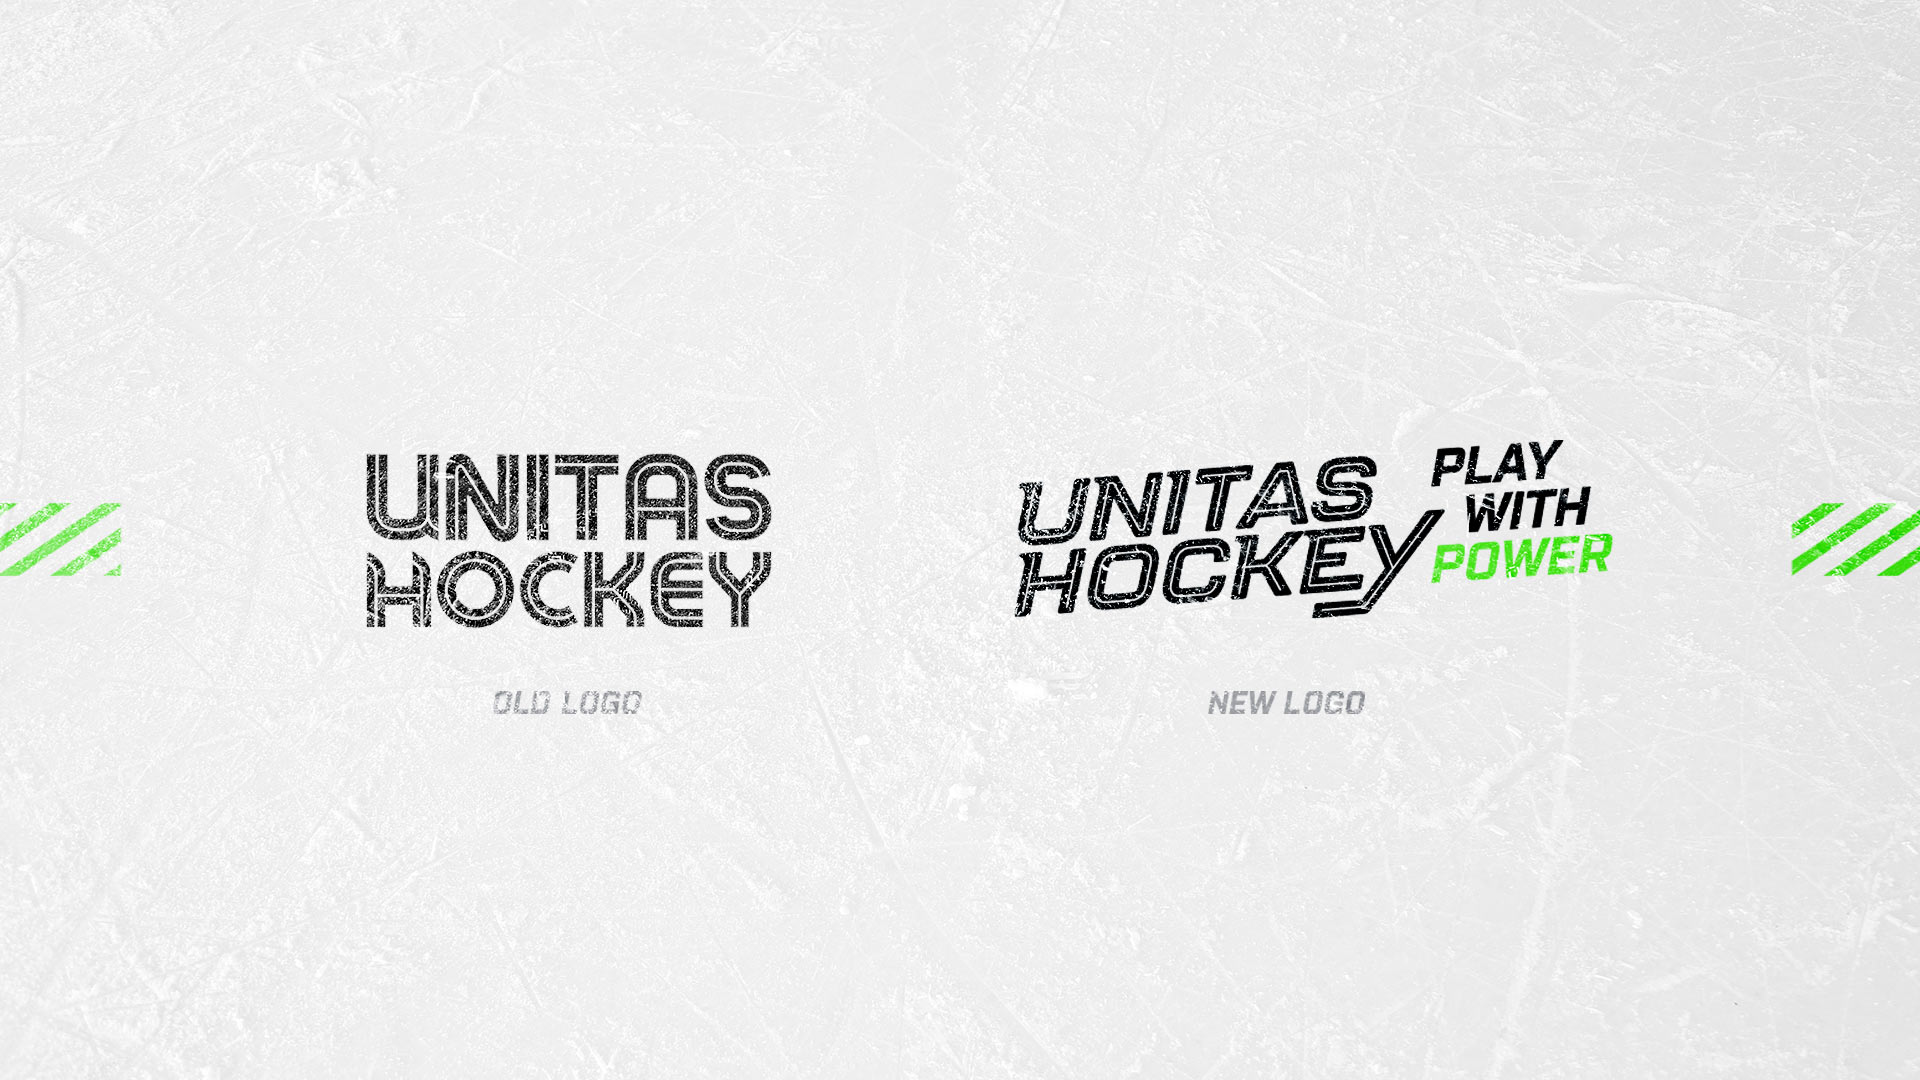 unitas hockey logo before and after